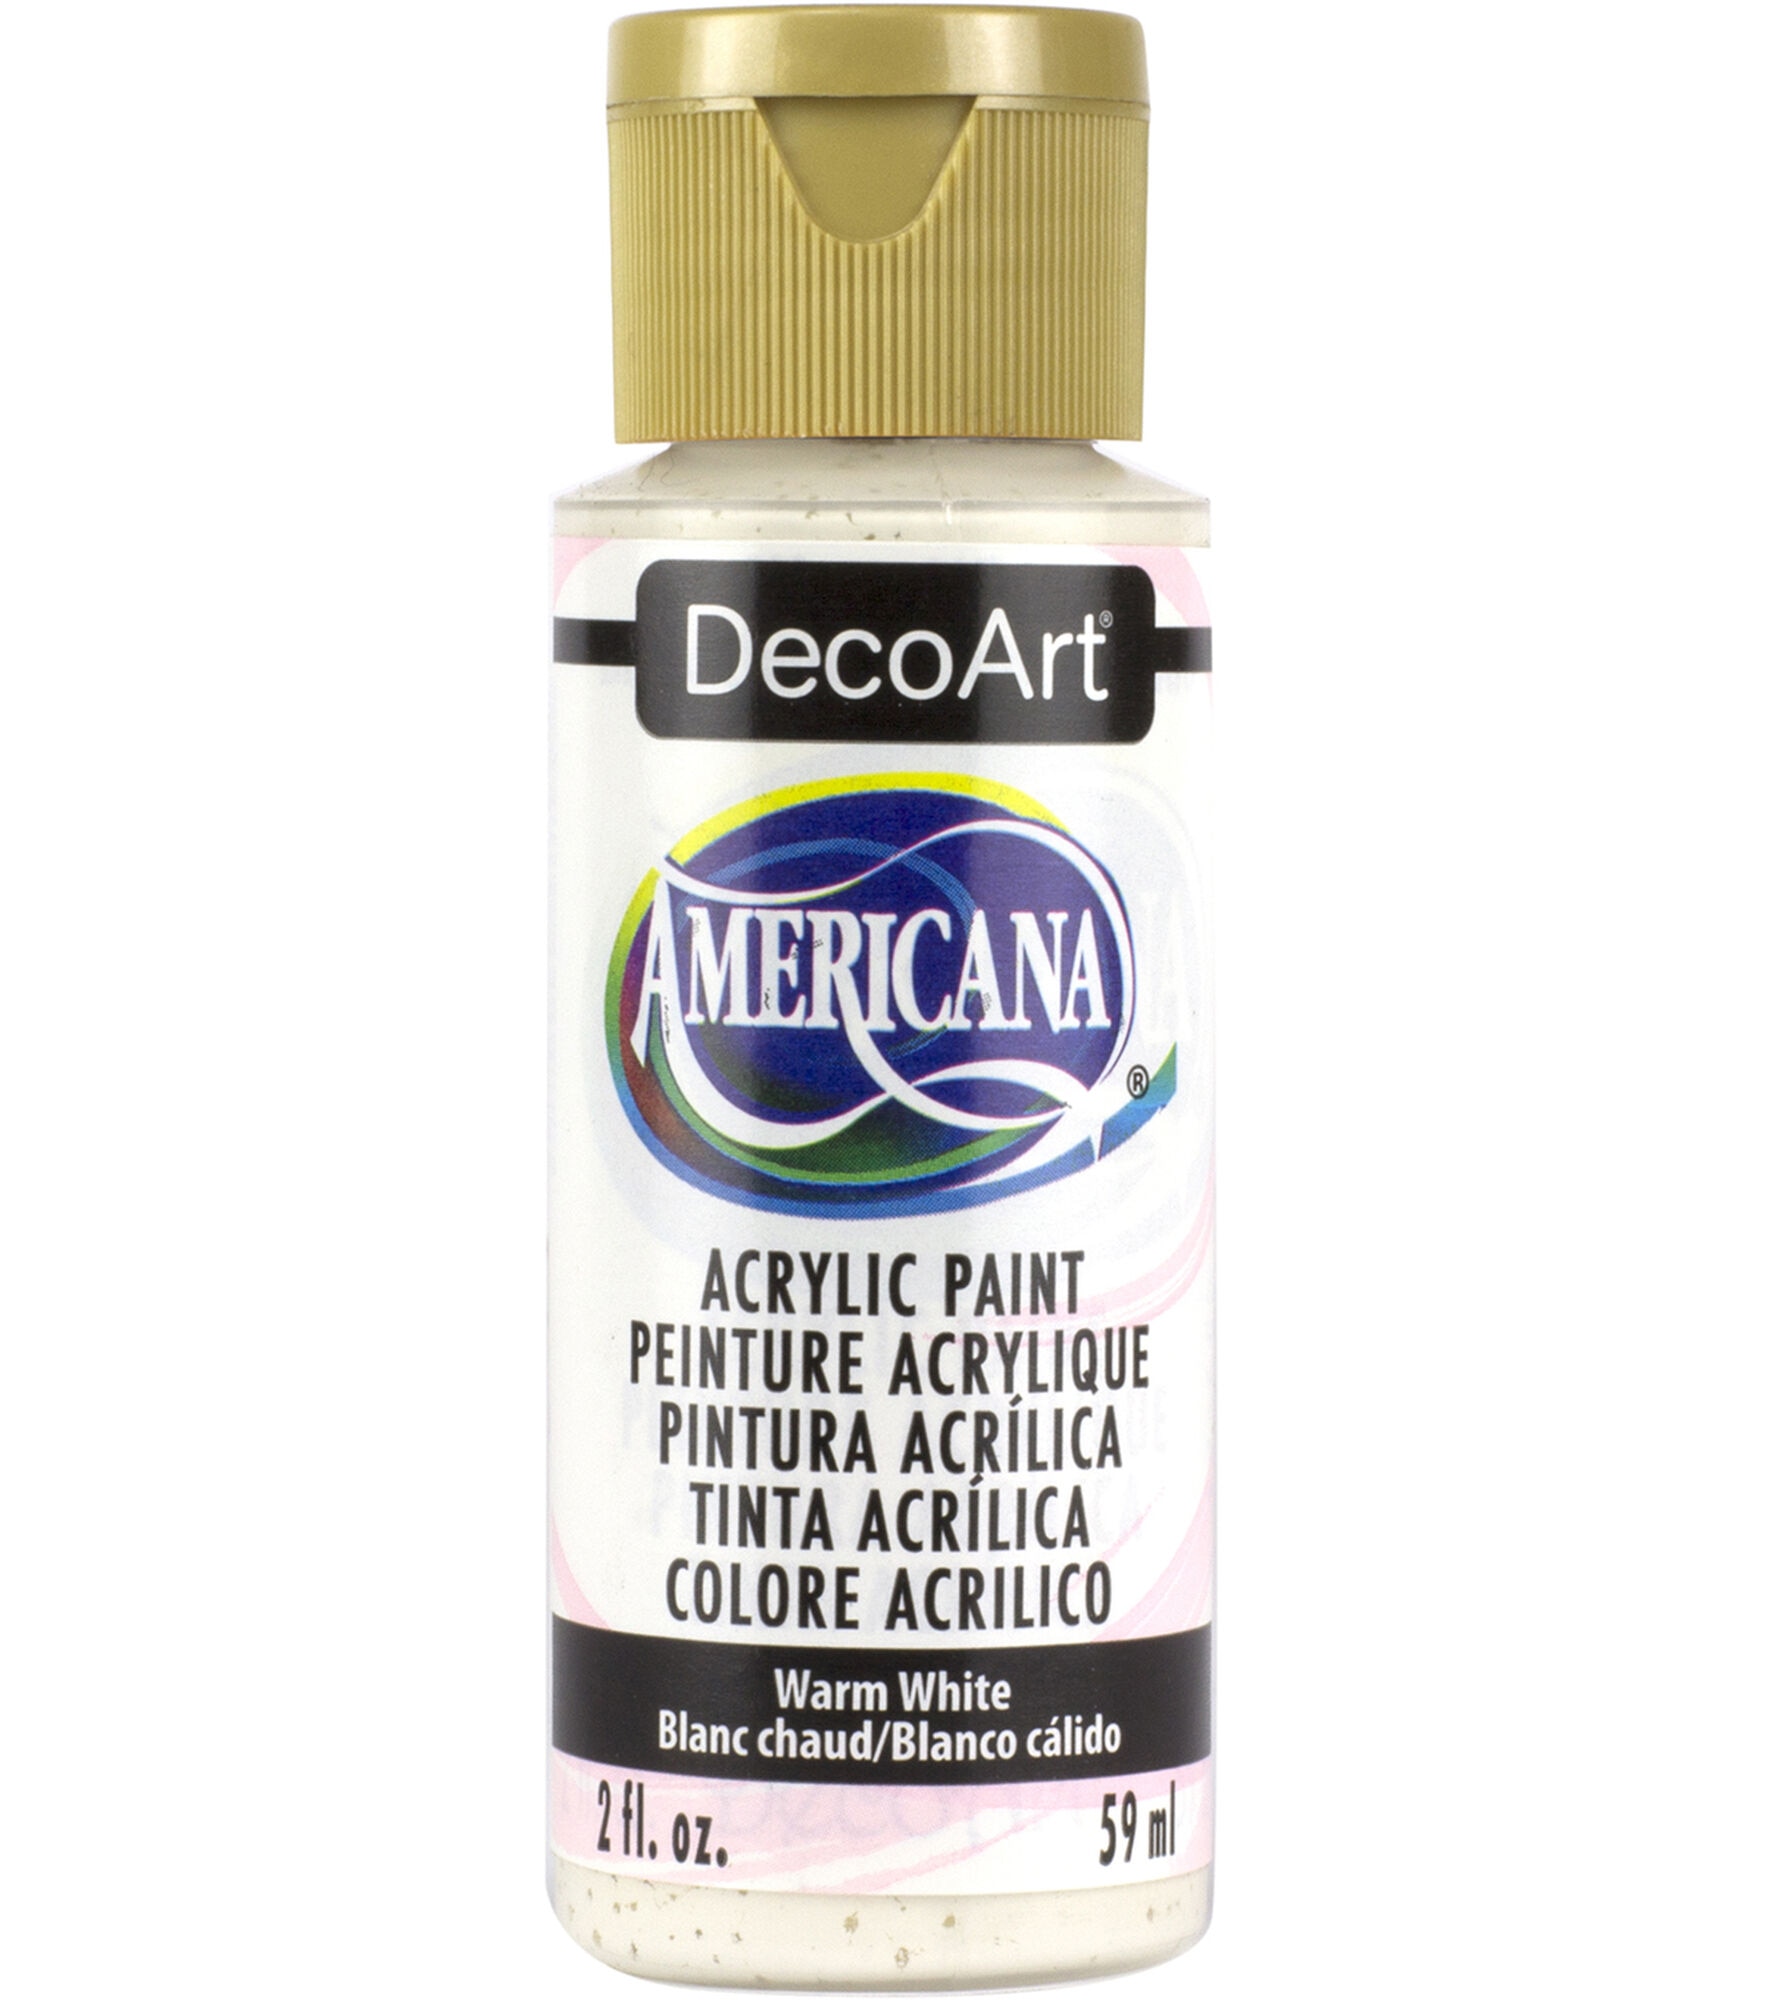 DecoArt Americana Acrylic 2oz Paint, Warm White, hi-res